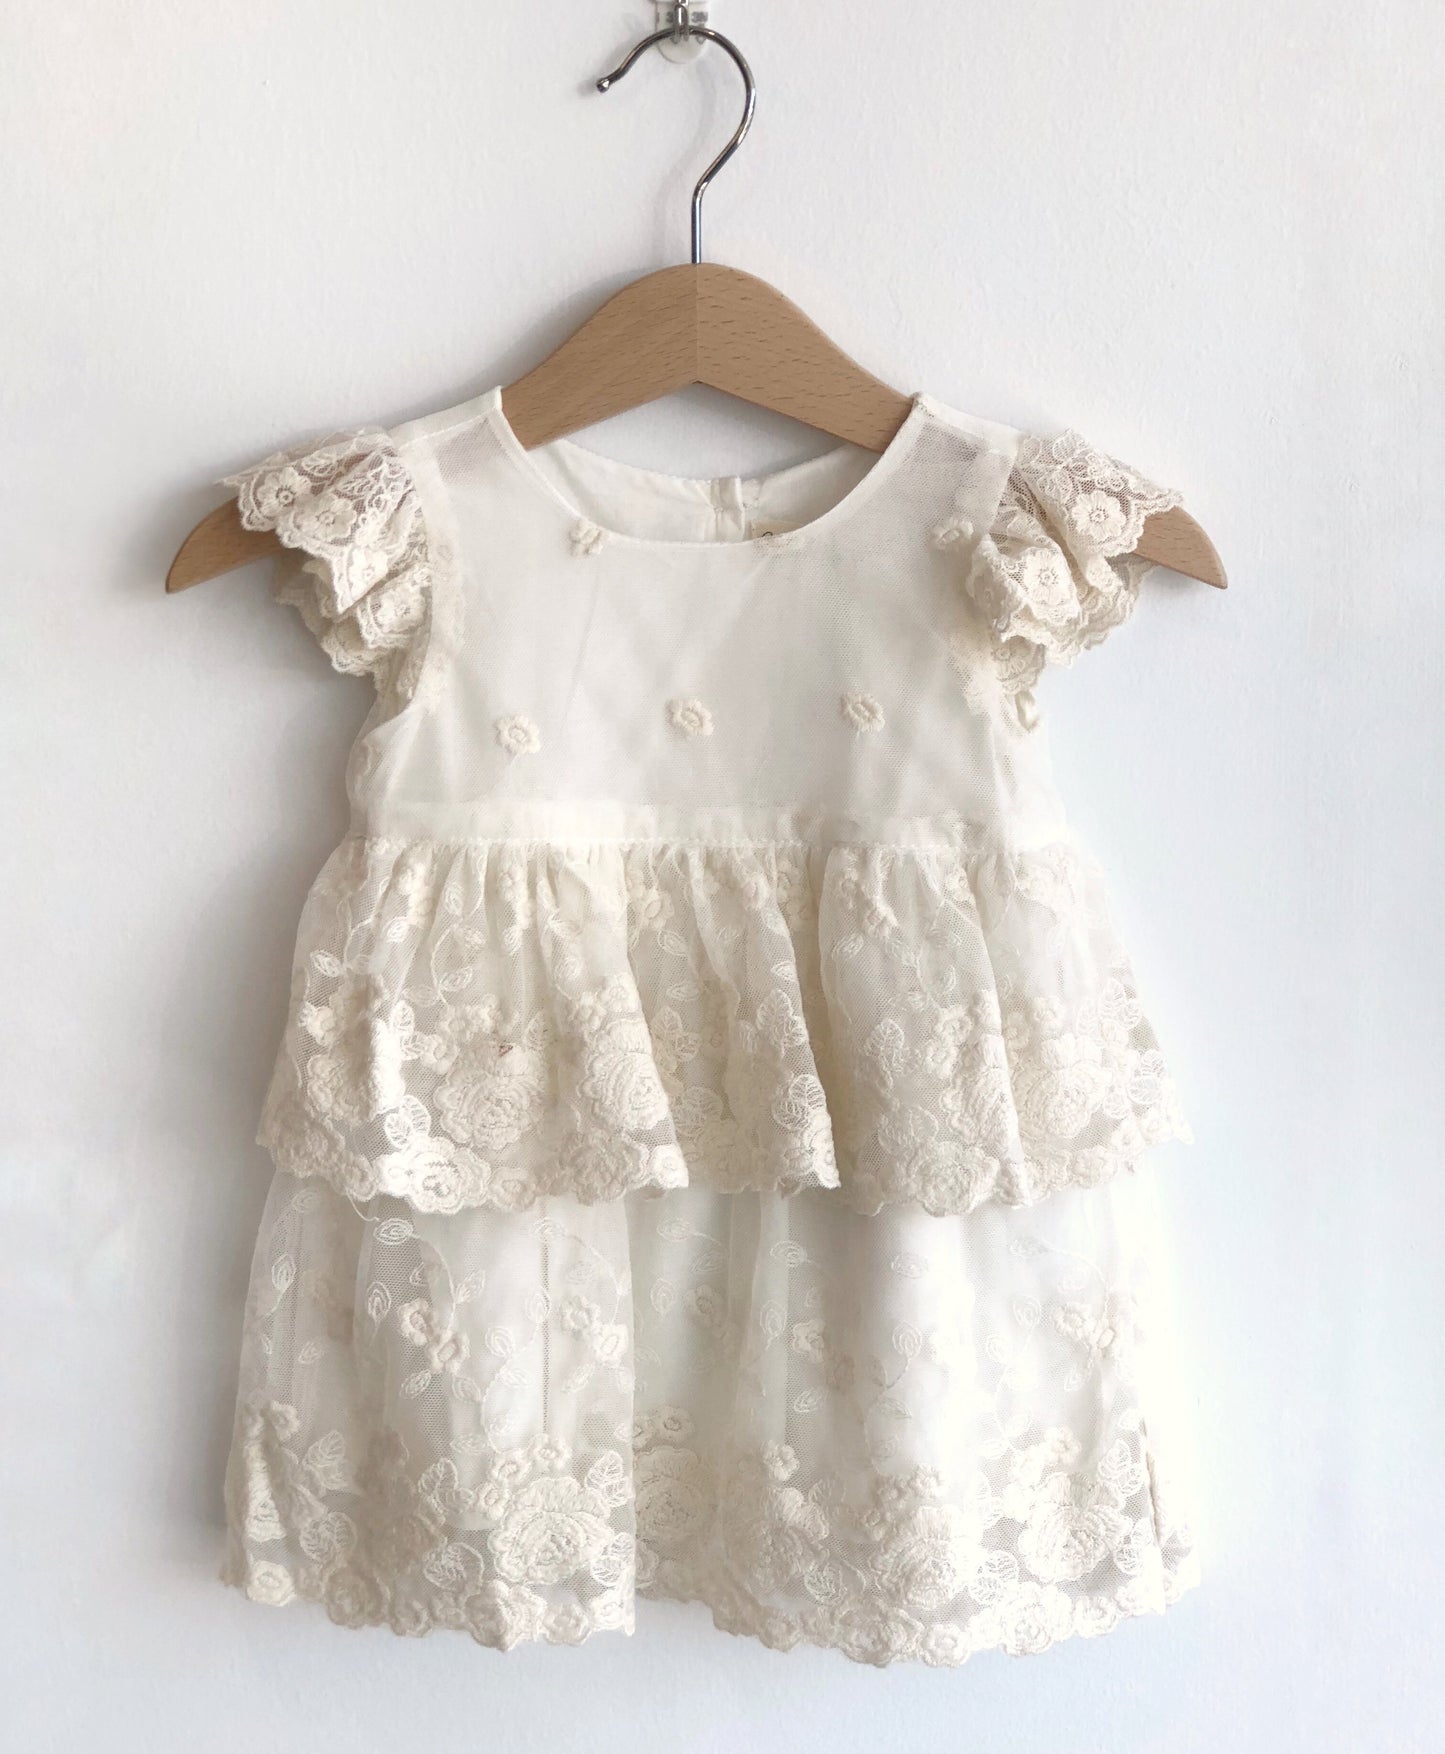 Blossom Baby Lace dress. Cream